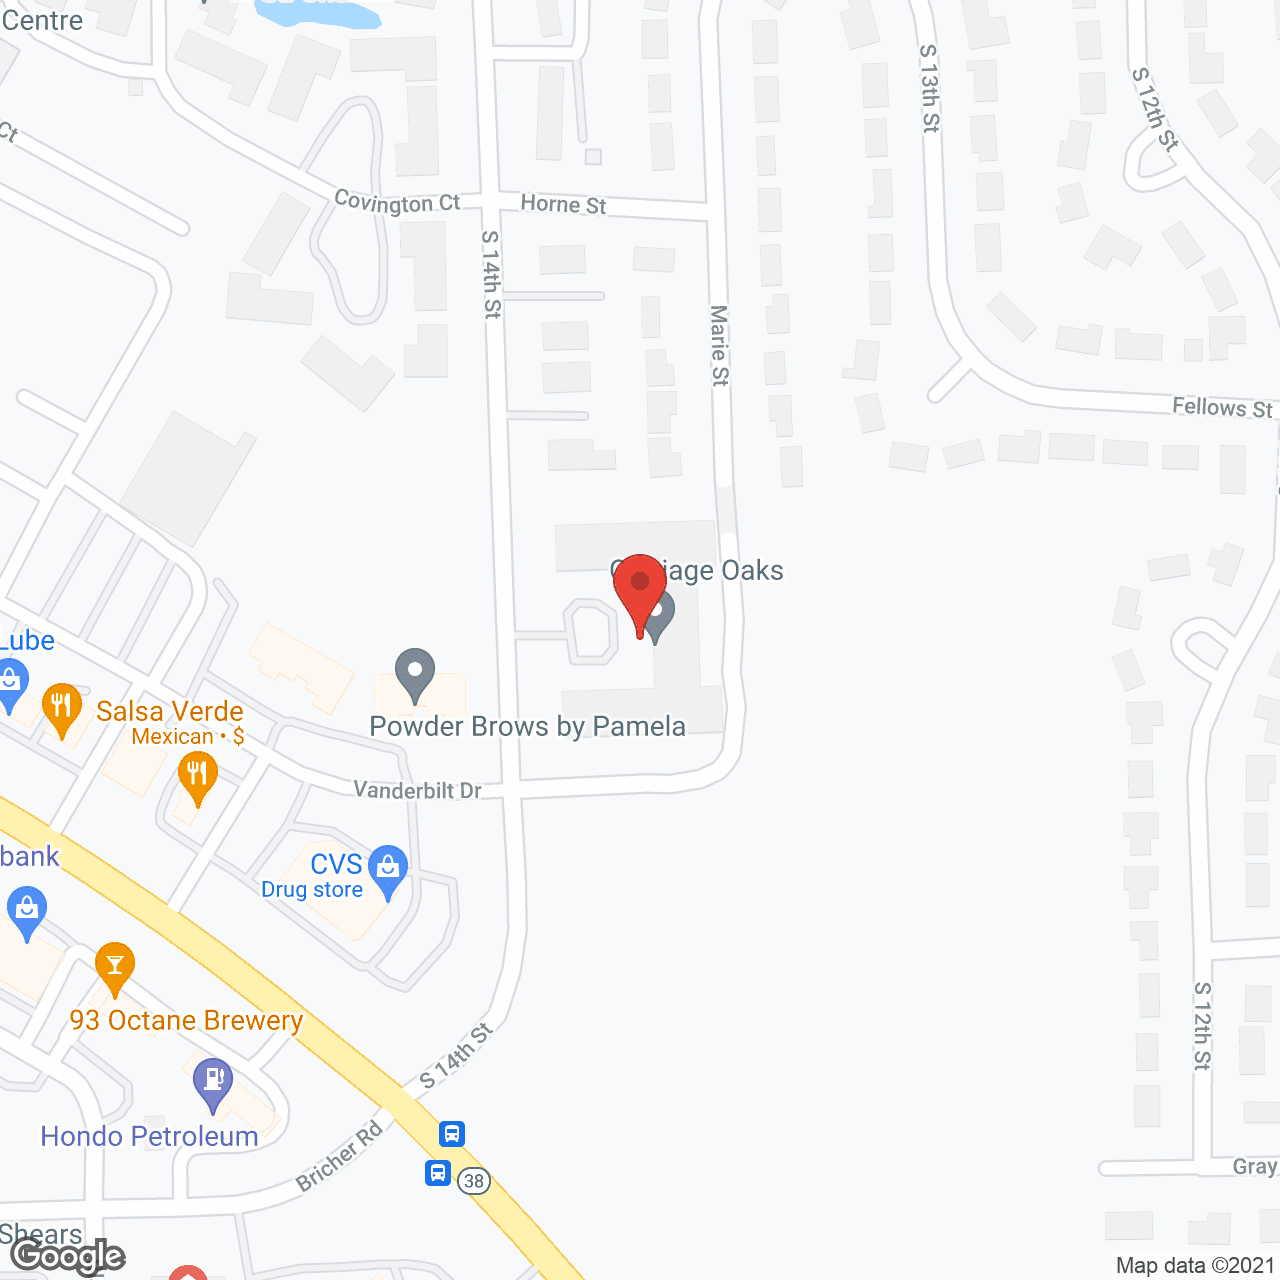 Carriage Oaks in google map